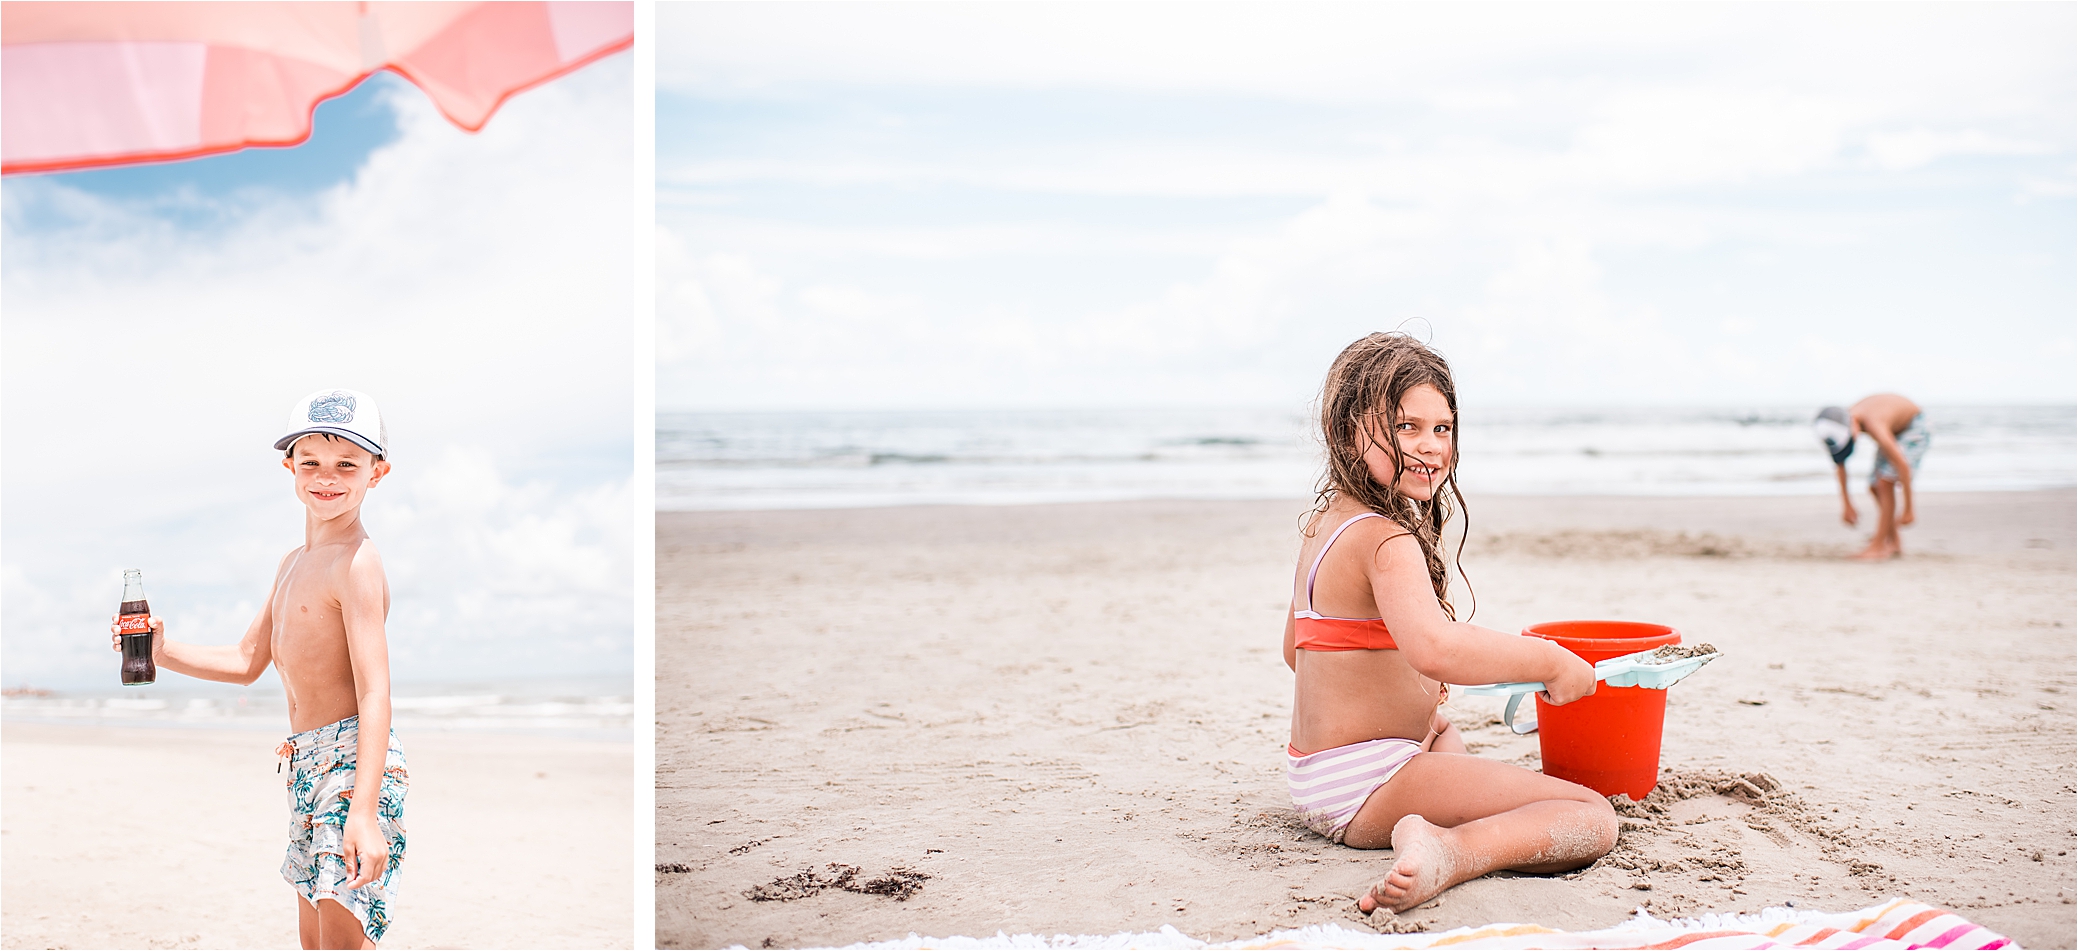 Kids at Galveston beach in the summer